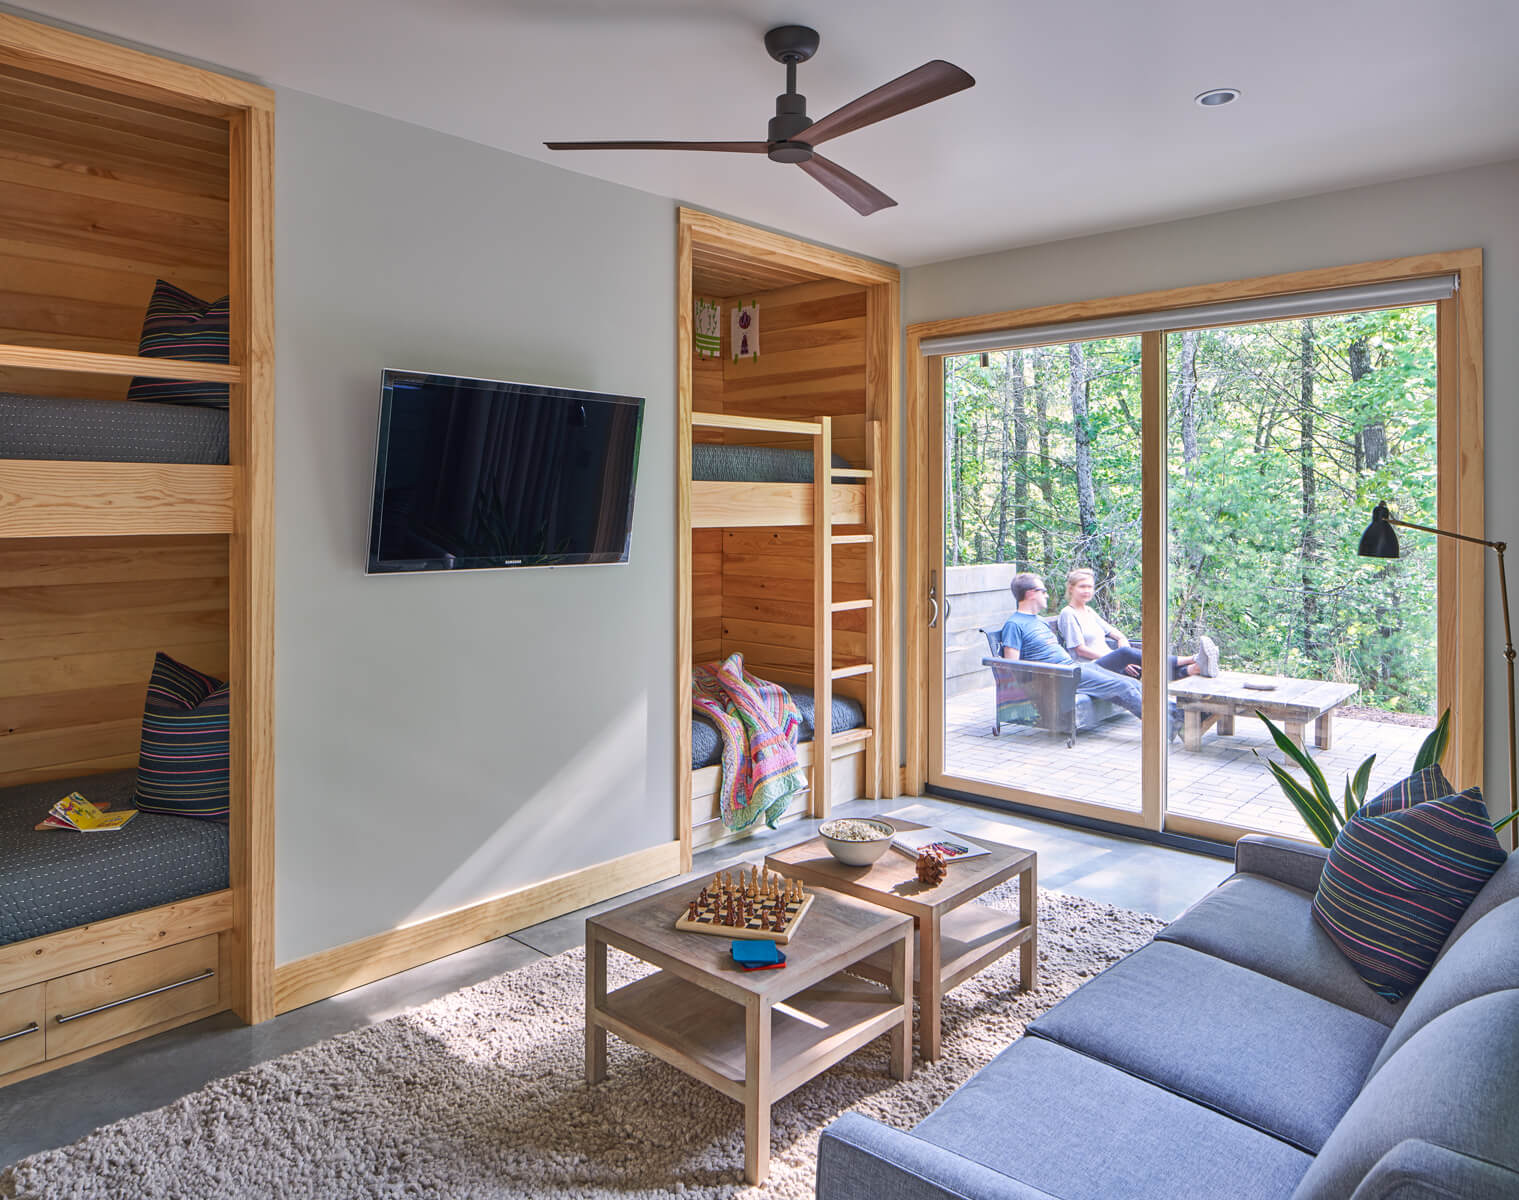 The Camp Campos interior architectural home design in Western North Carolina